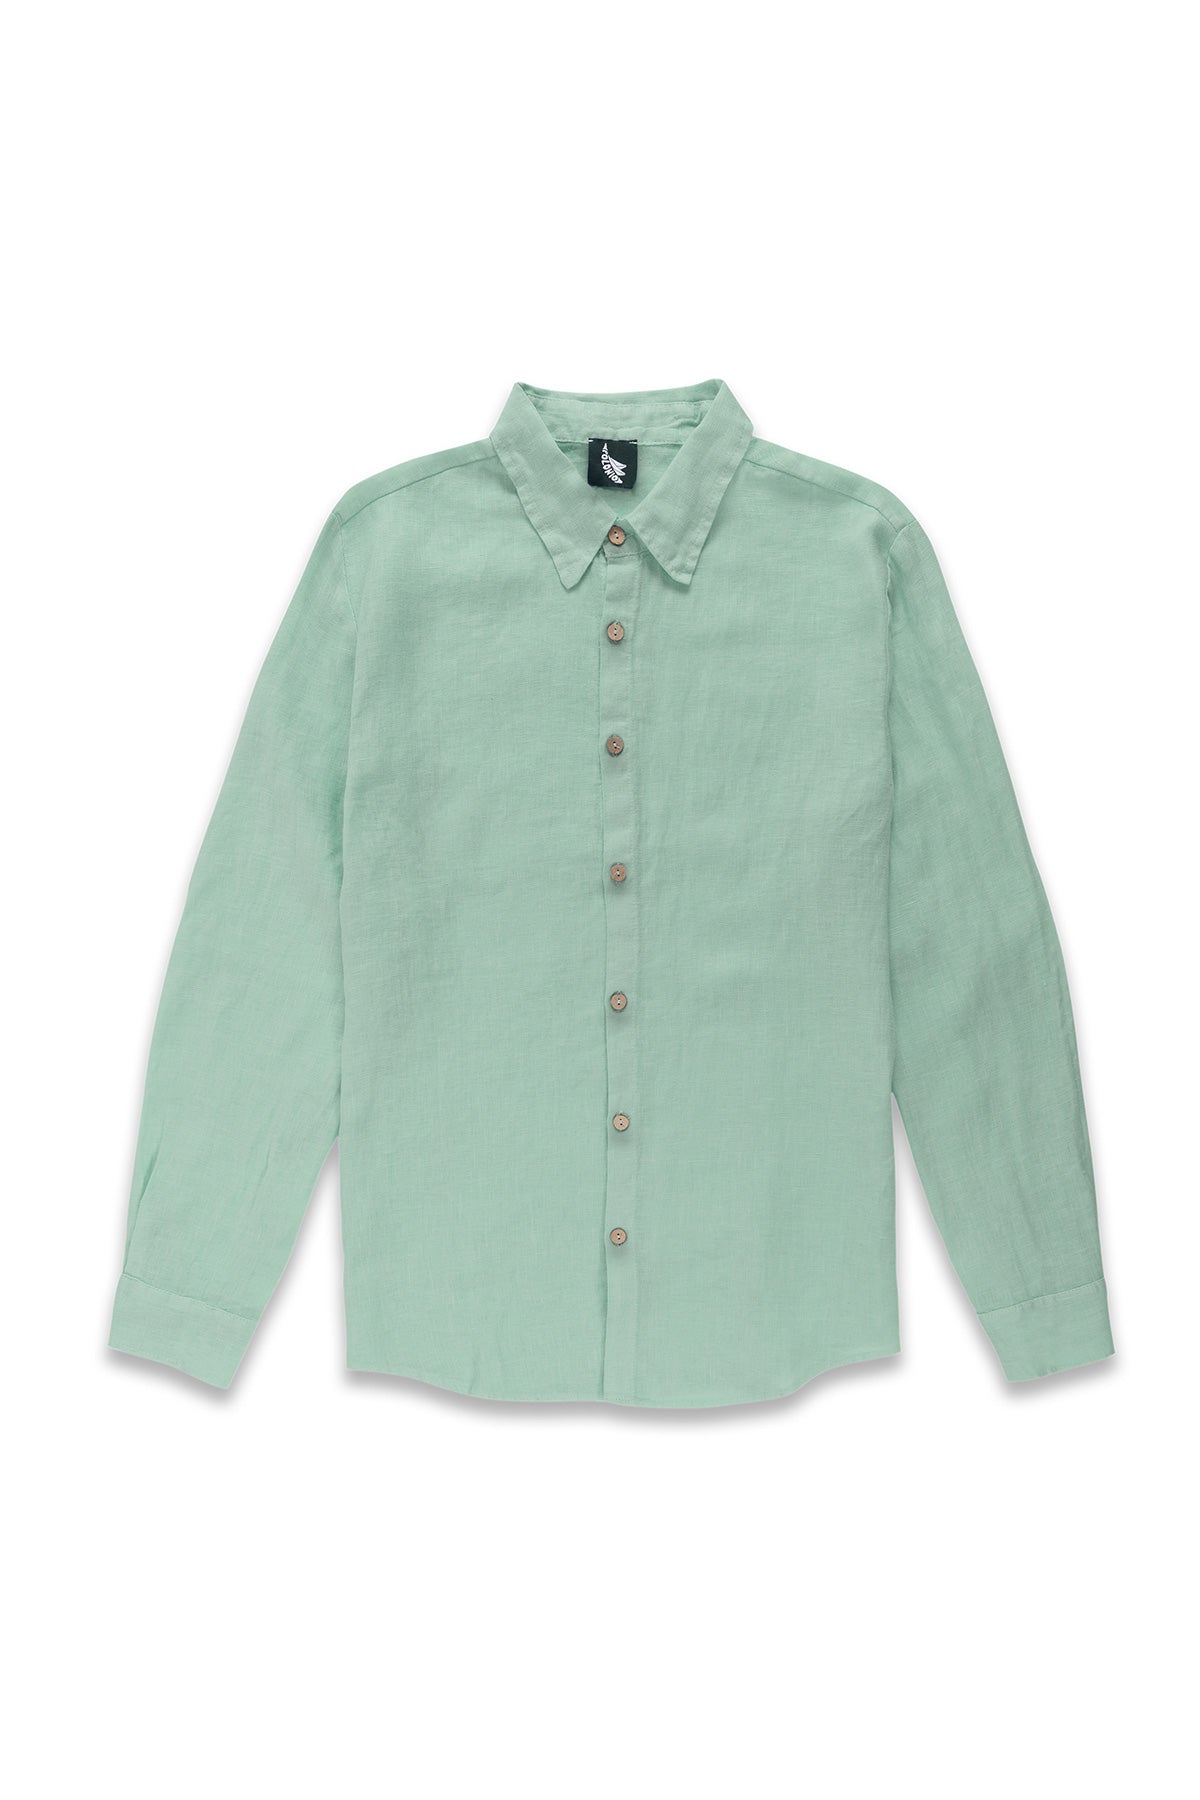 Mint Long Sleeve Linen Shirt - Polonio